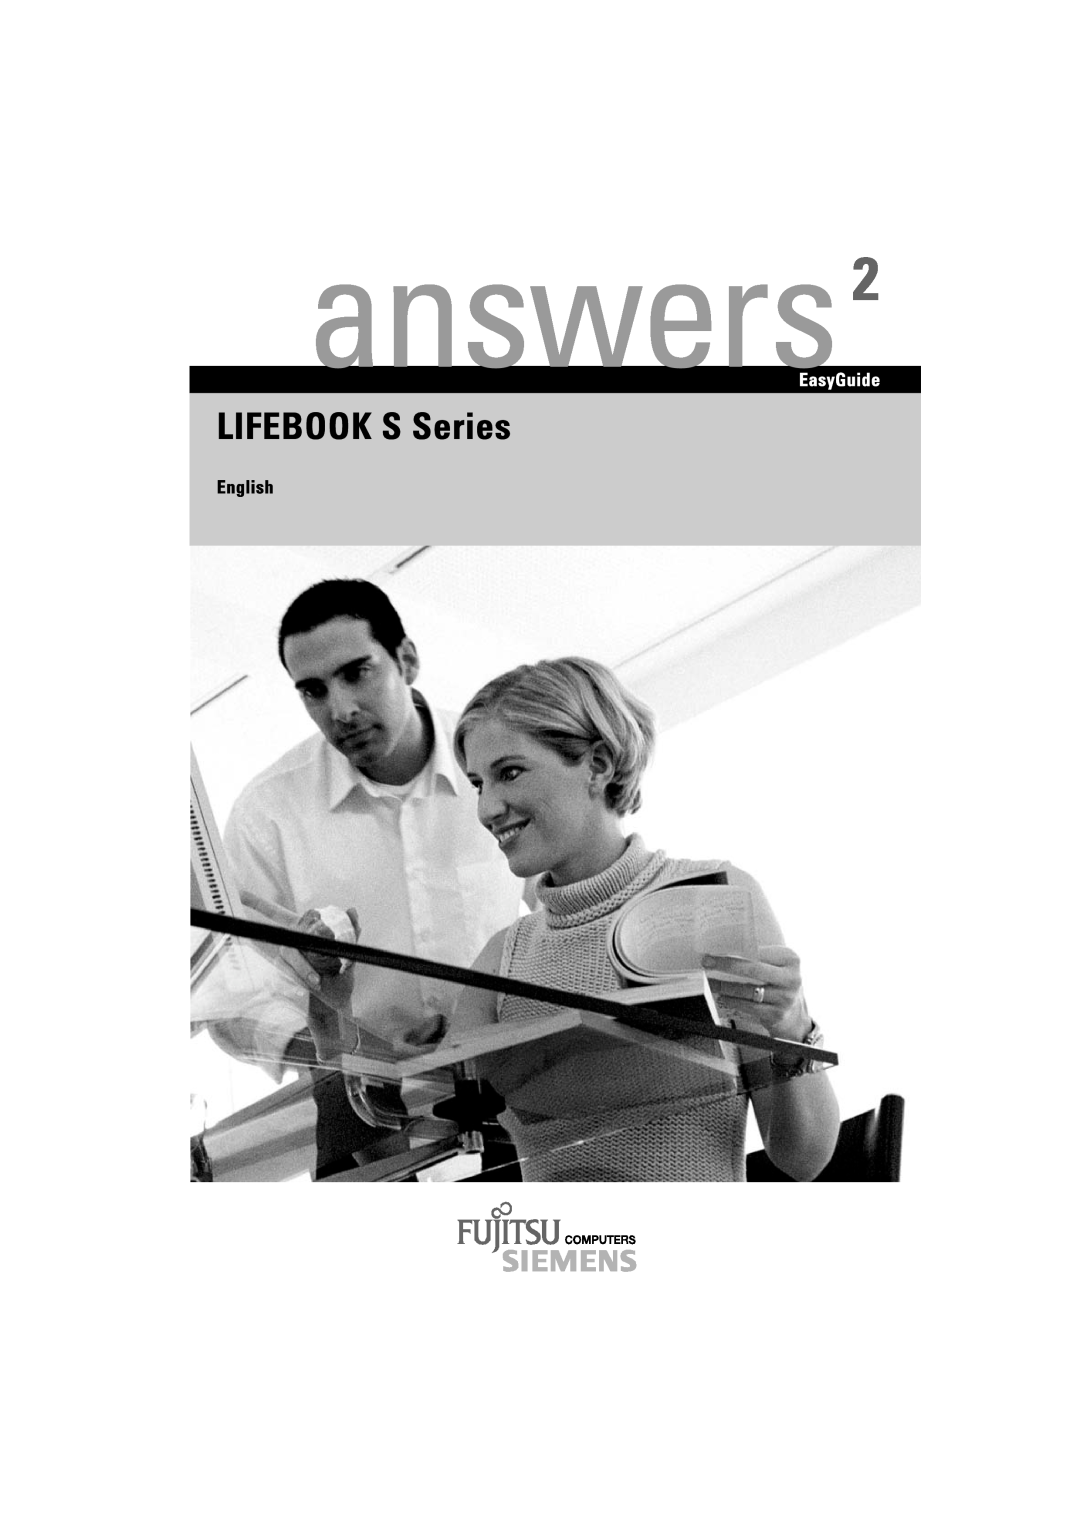 Fujitsu S SERIES manual English, answers, LIFEBOOK S Series, EasyGuide 